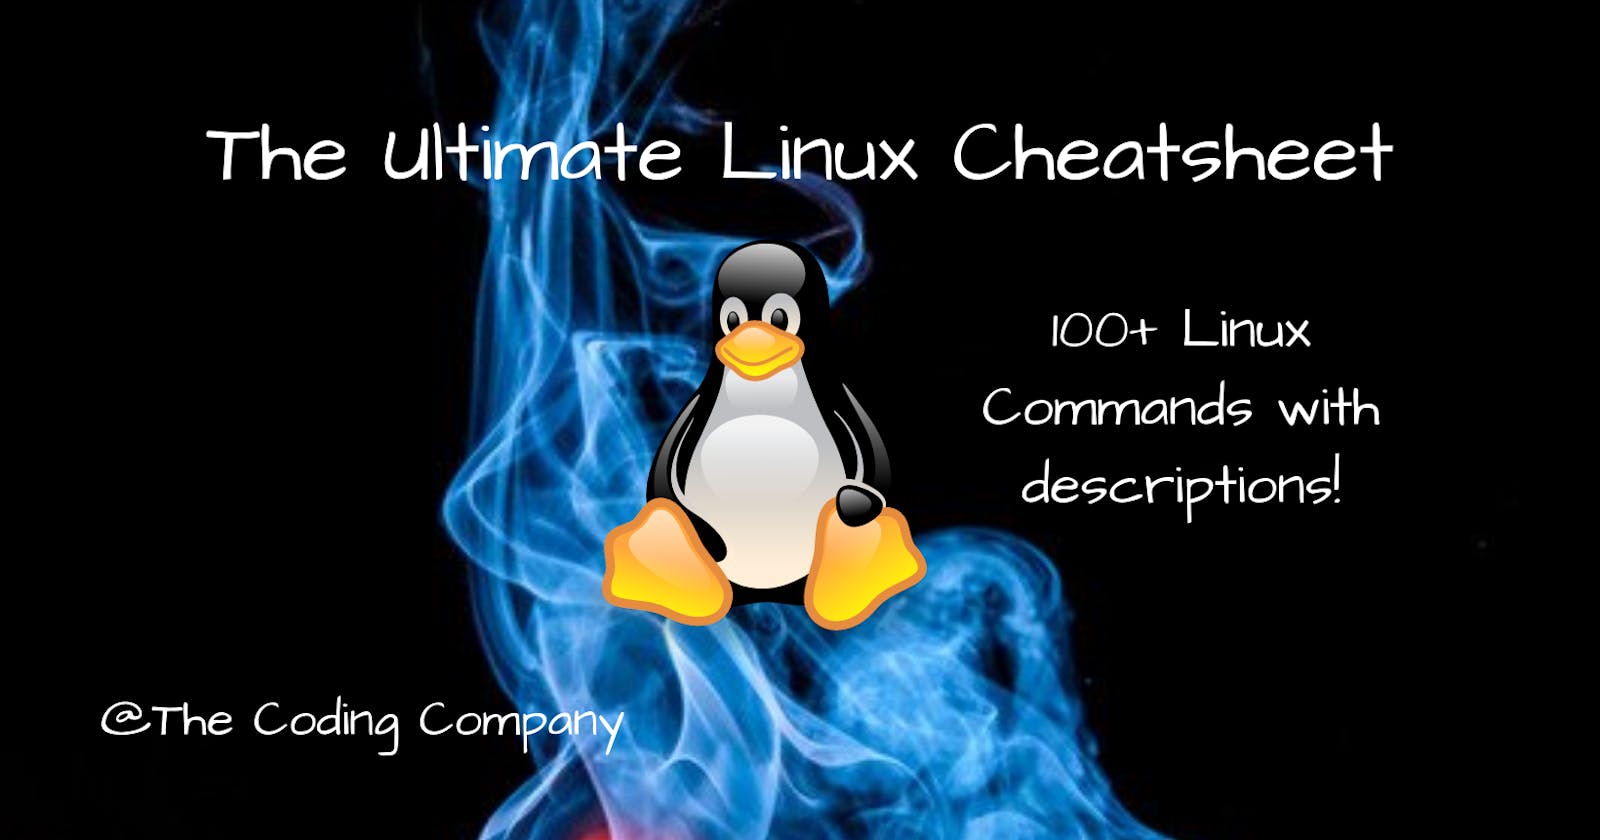 The Ultimate Linux Cheatsheet